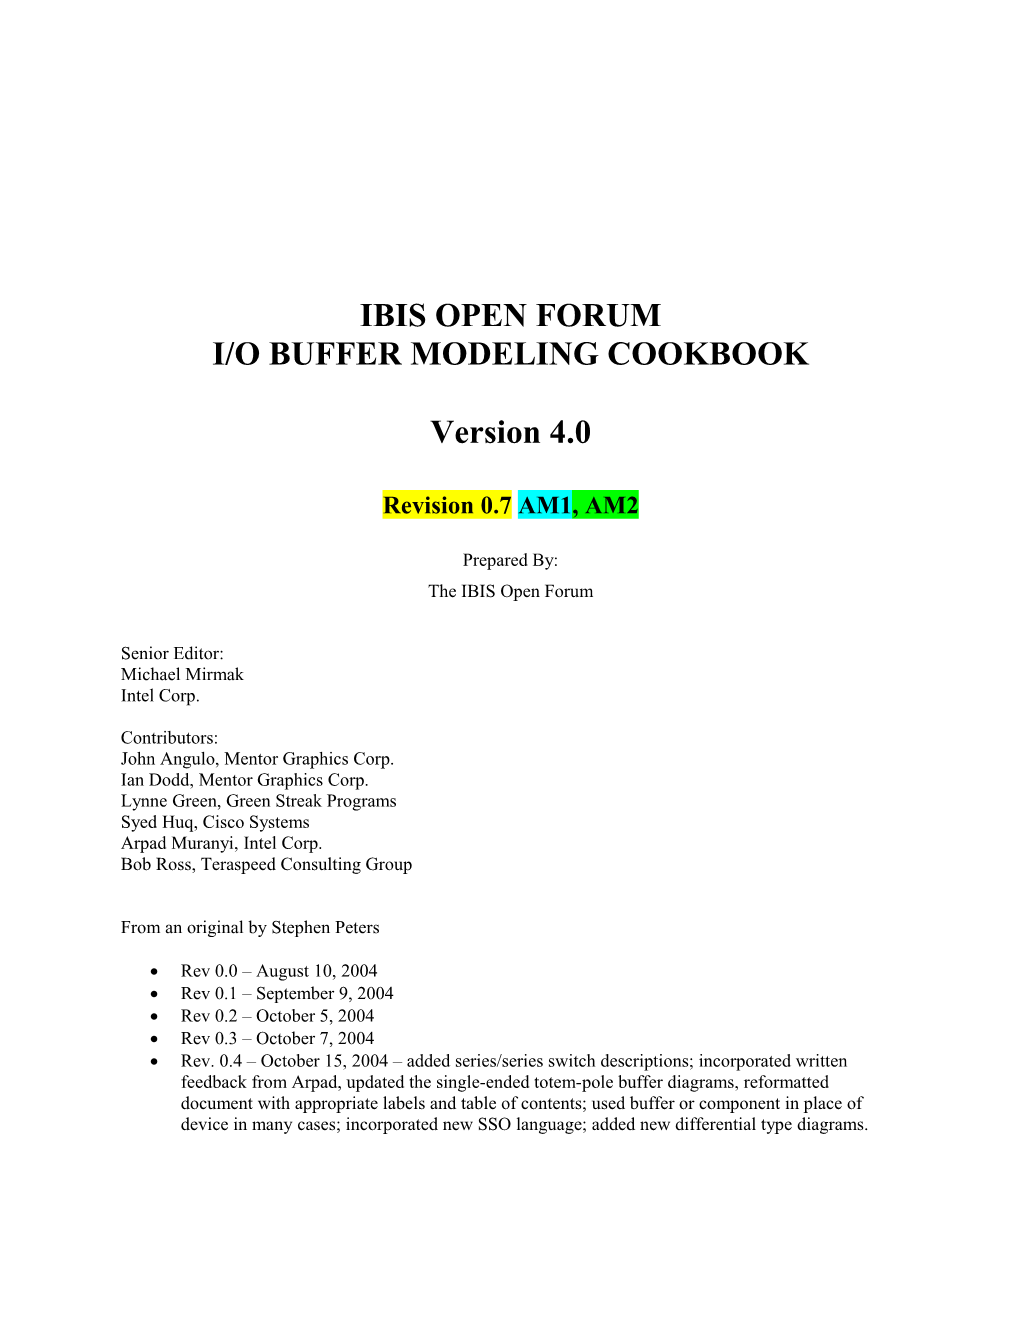 IBIS Cookbook Draft 0.5